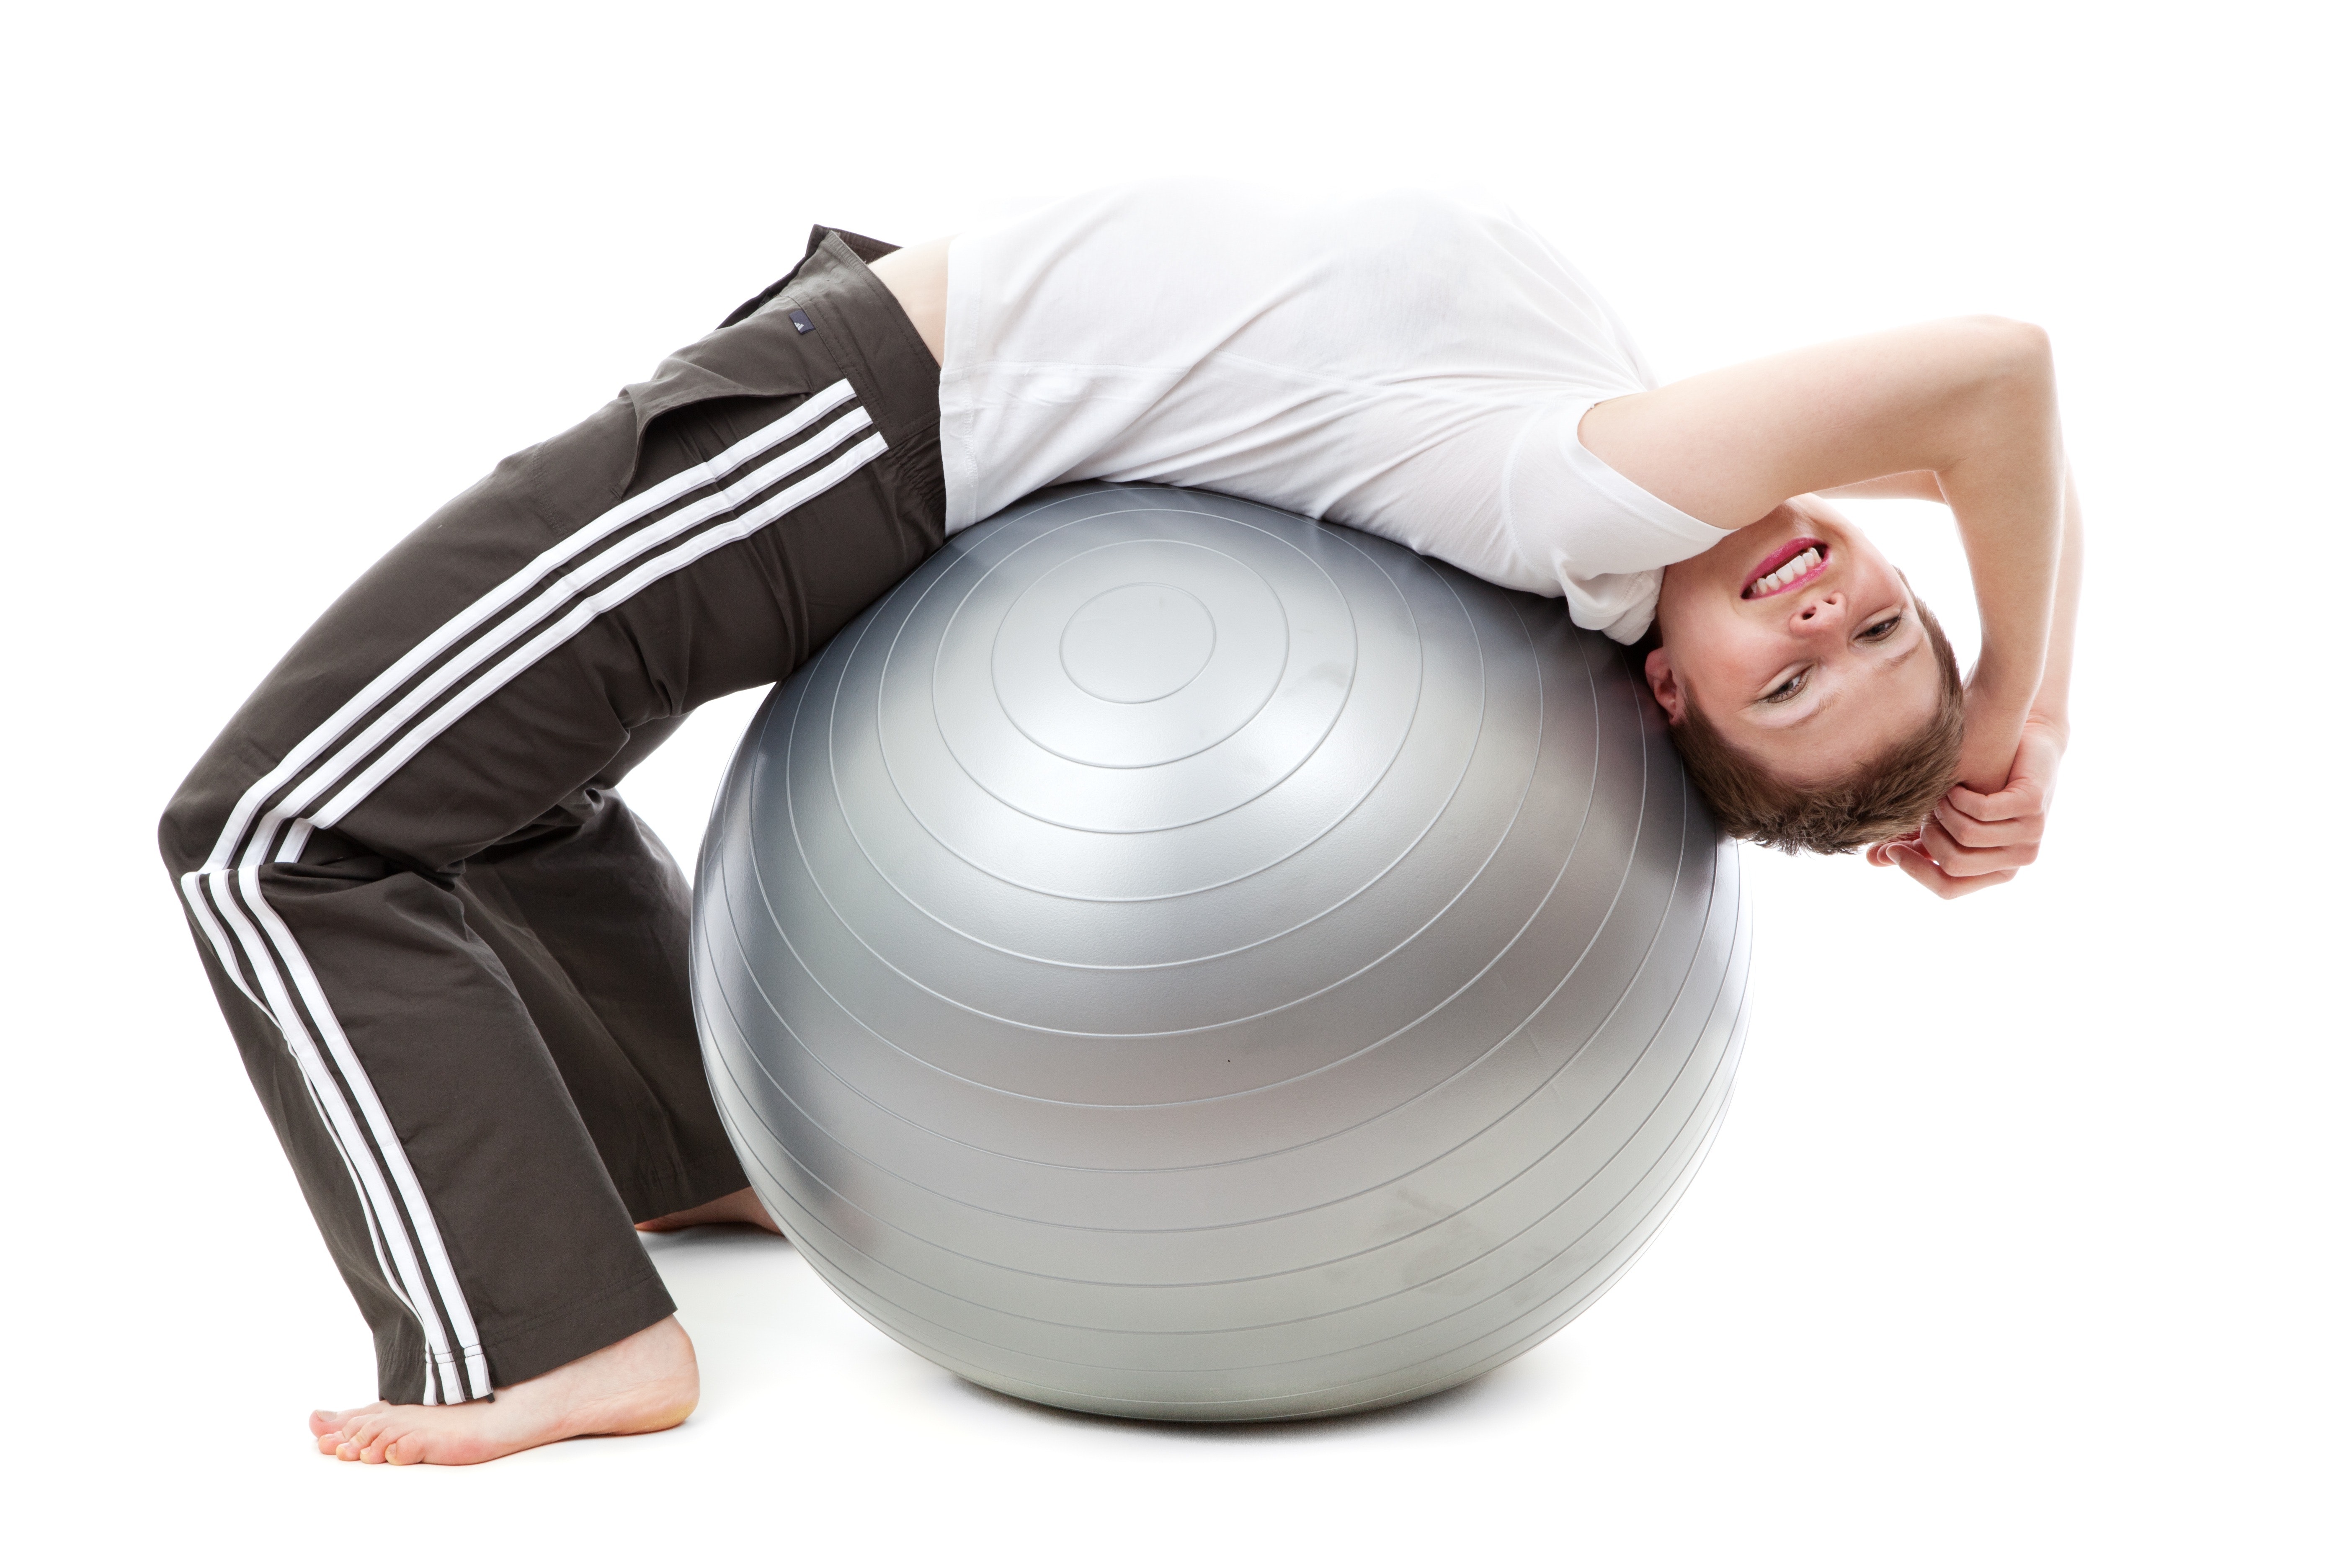 Pilates Ball, Stability balls